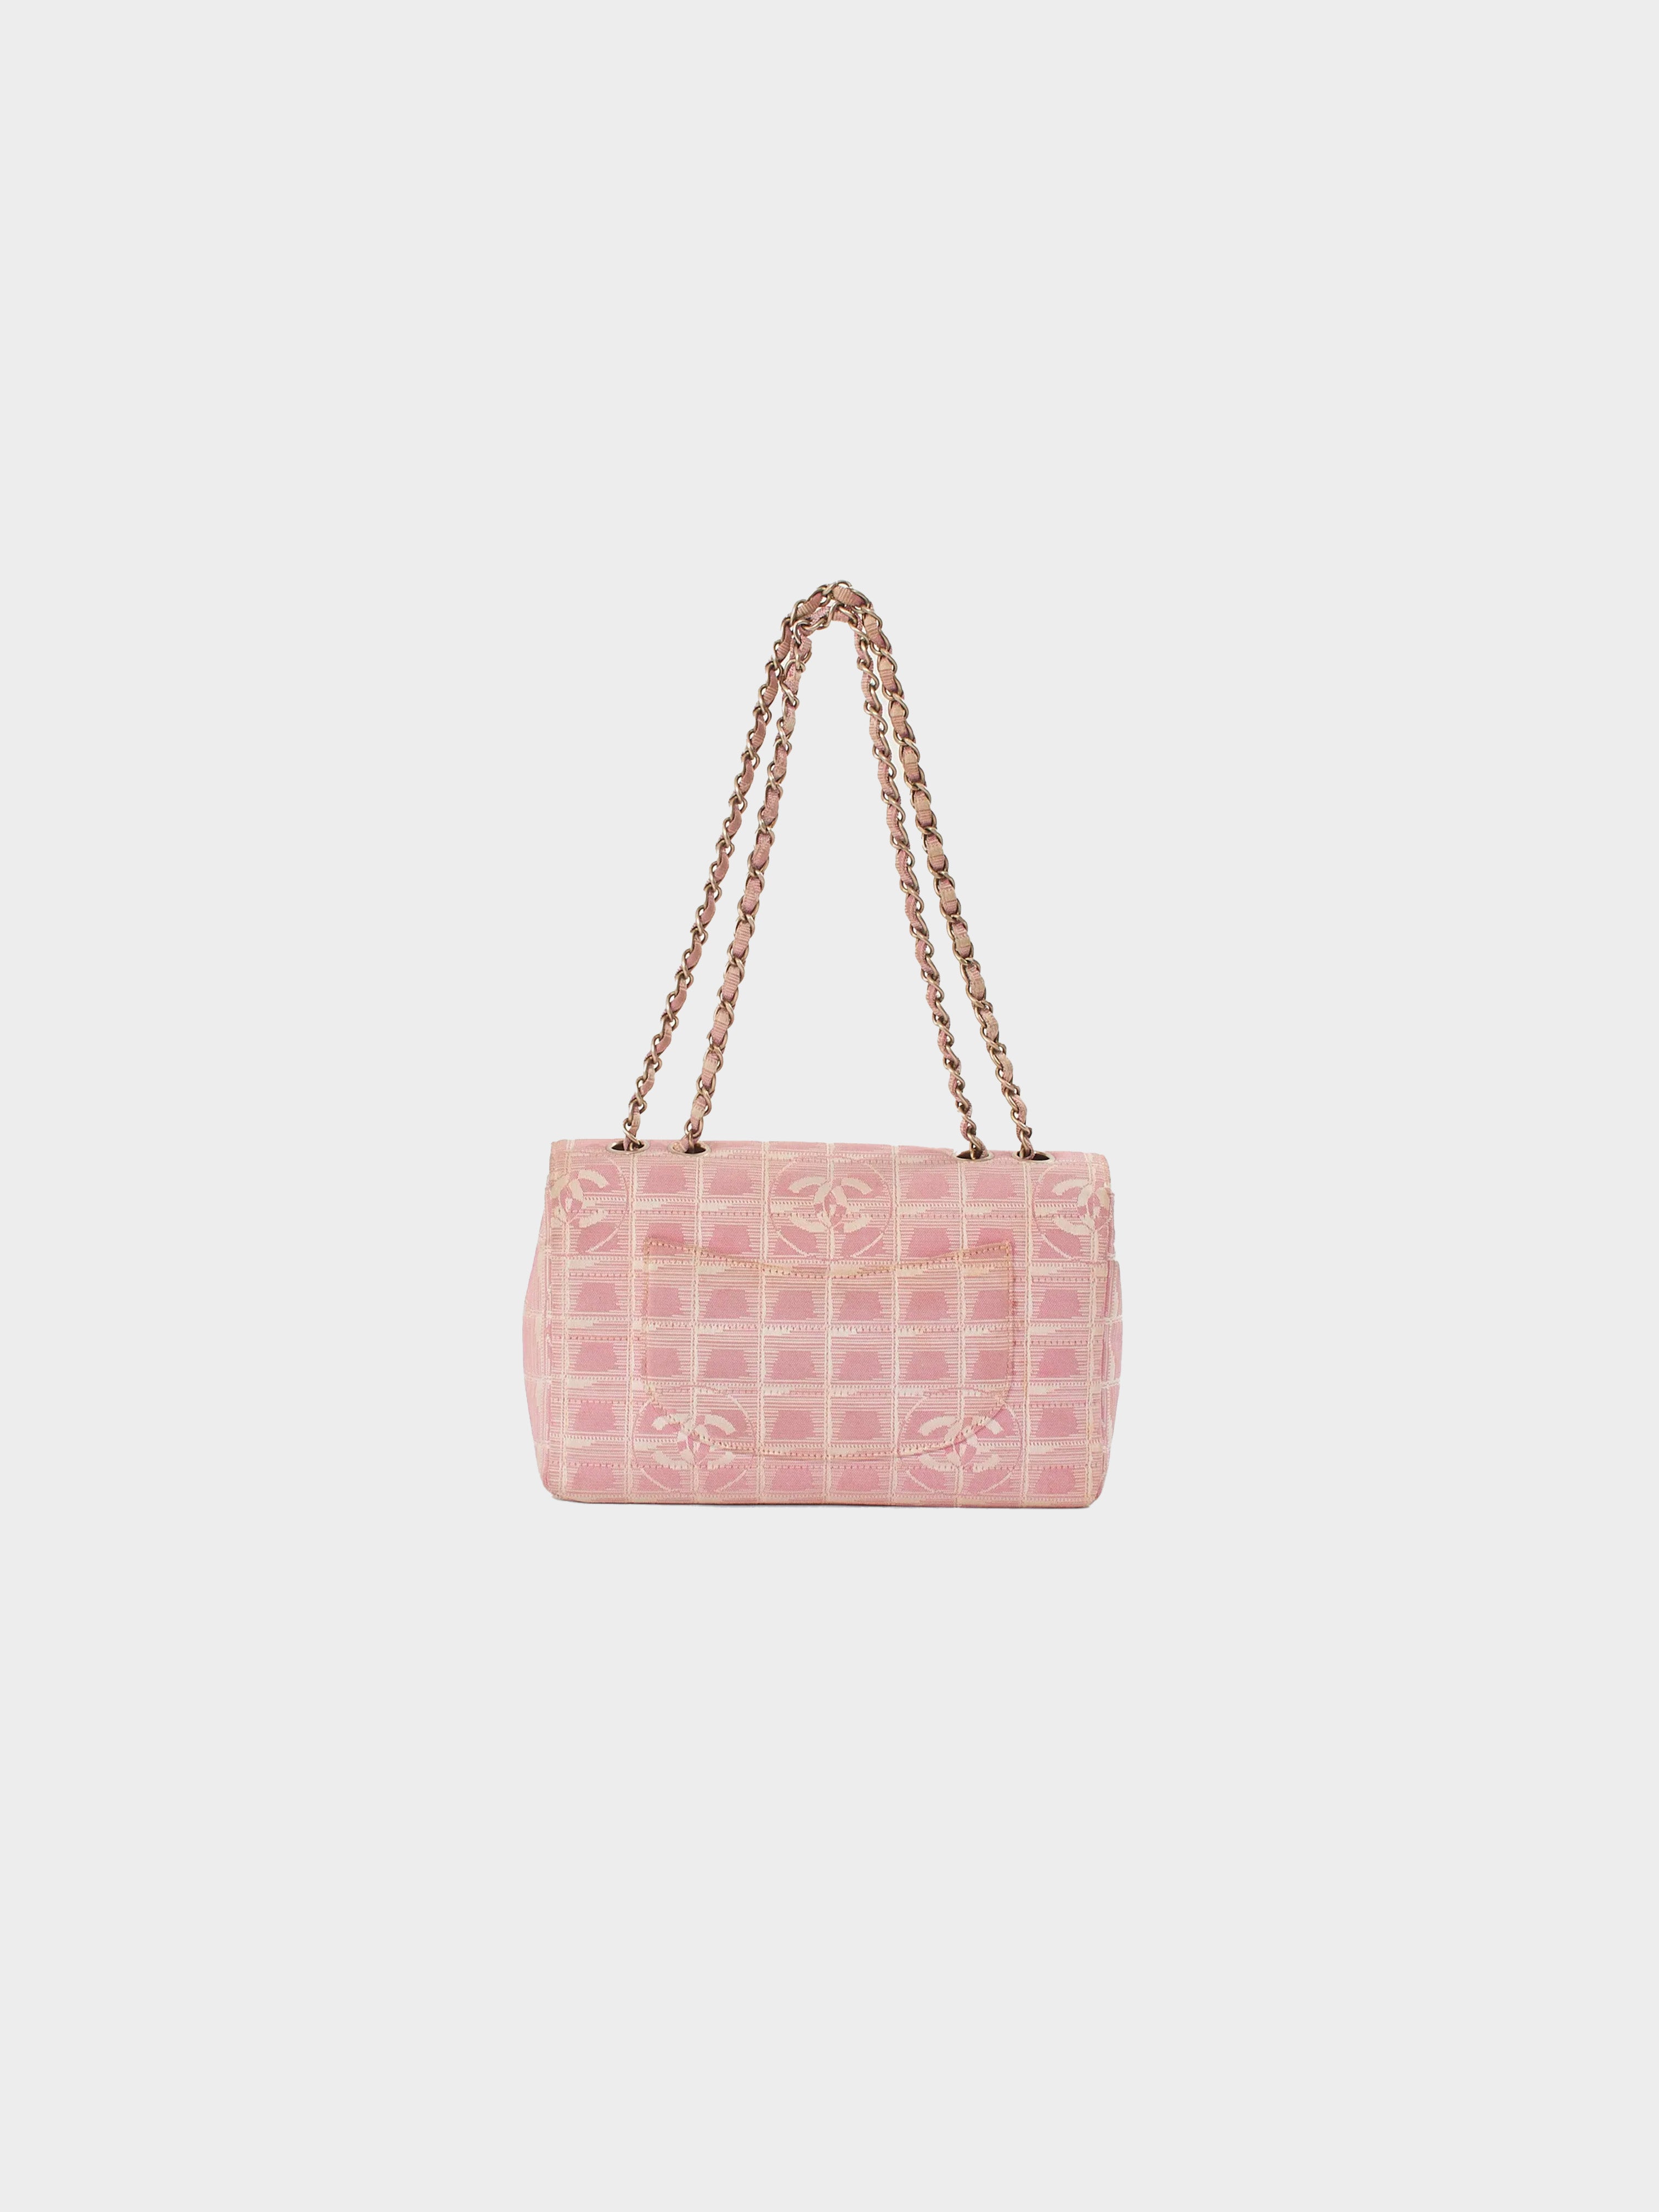 Chanel Chanel Travel Line Light Pink Jacquard Nylon Mini Tote Bag